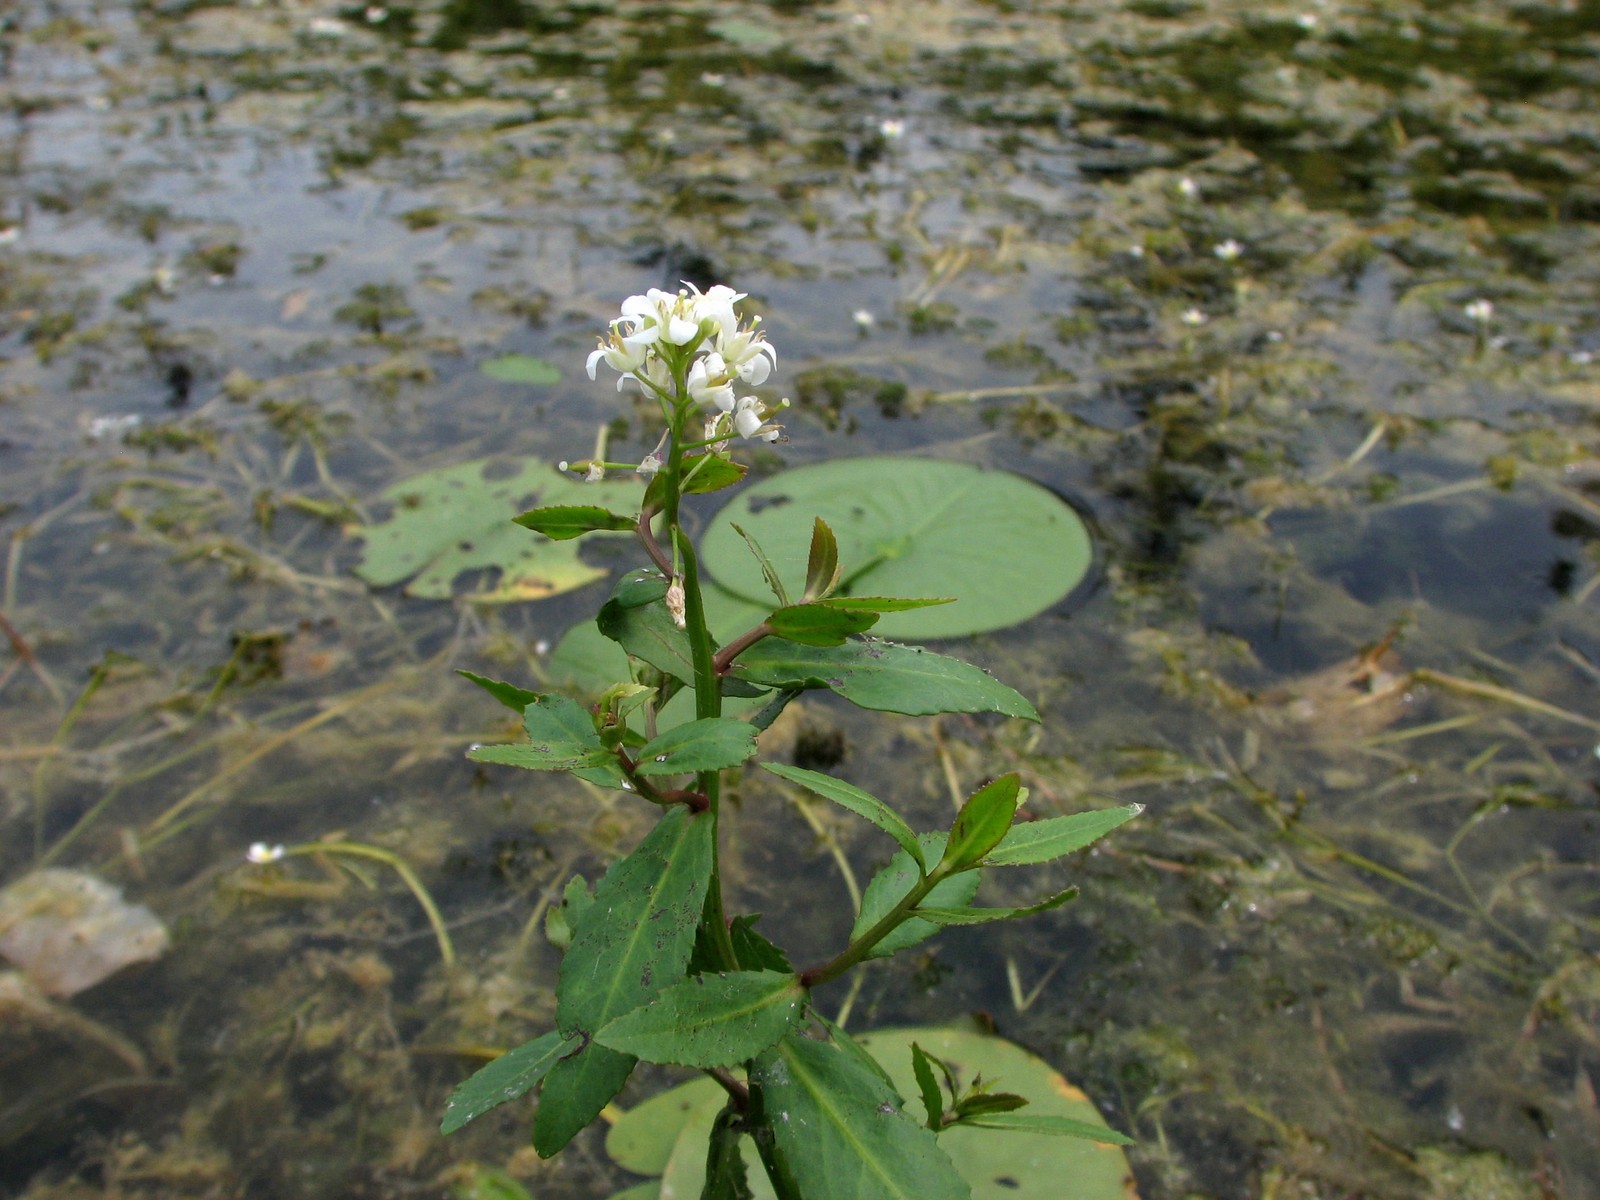 20070809121107 Lakecress (Neobeckia aquatica) aquatic with white flowersr - Mud Creek, Manitoulin Island.JPG